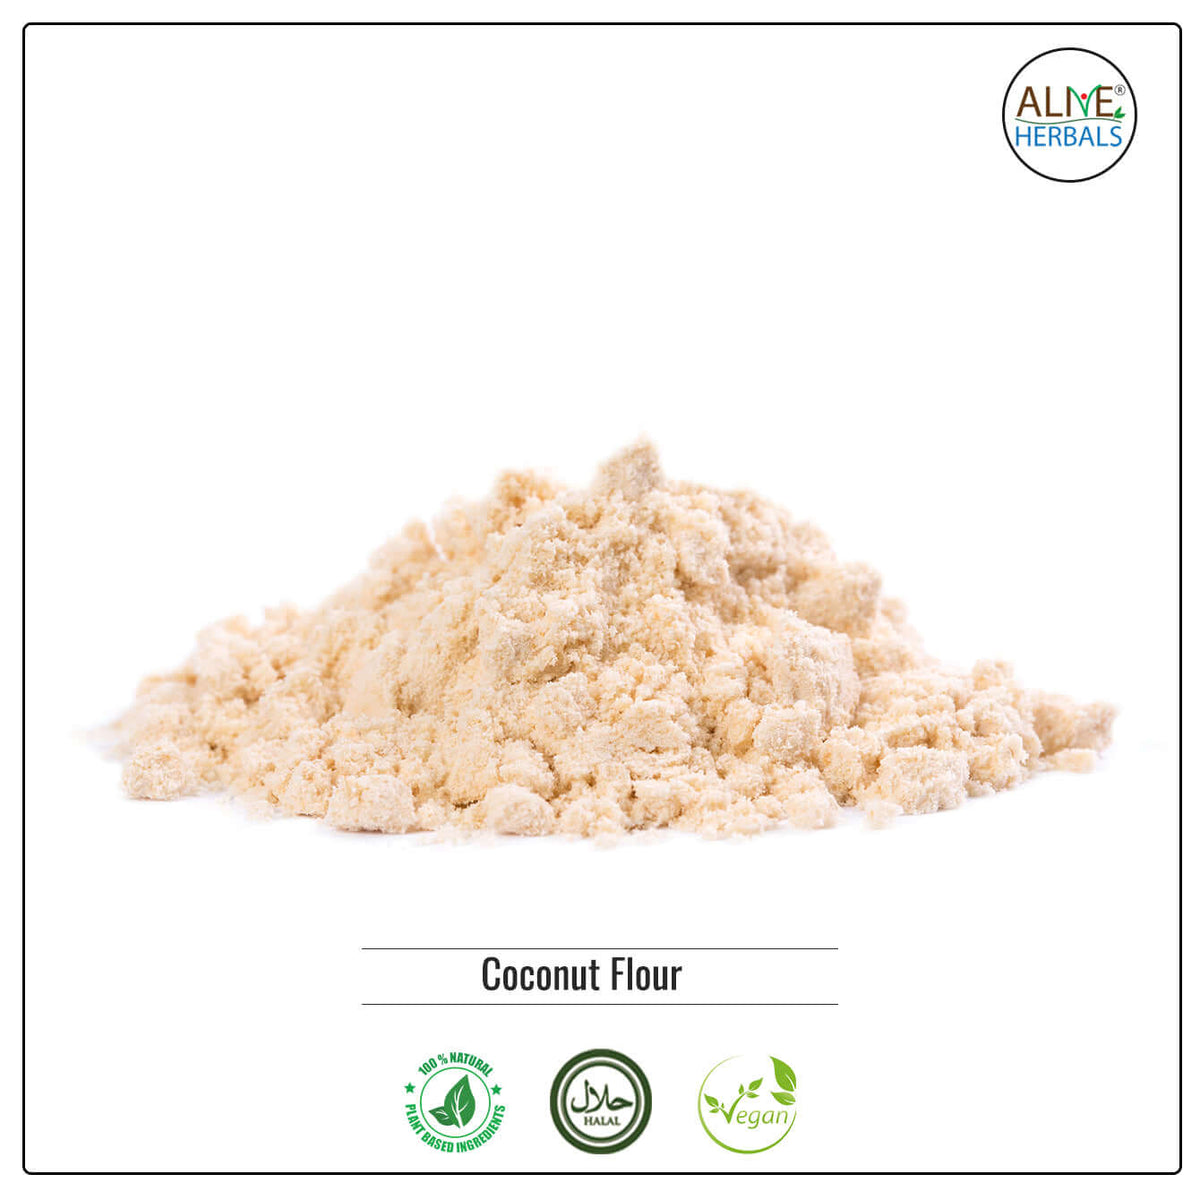 Coconut Flour - Shop at Natural Food Store | Alive Herbals.